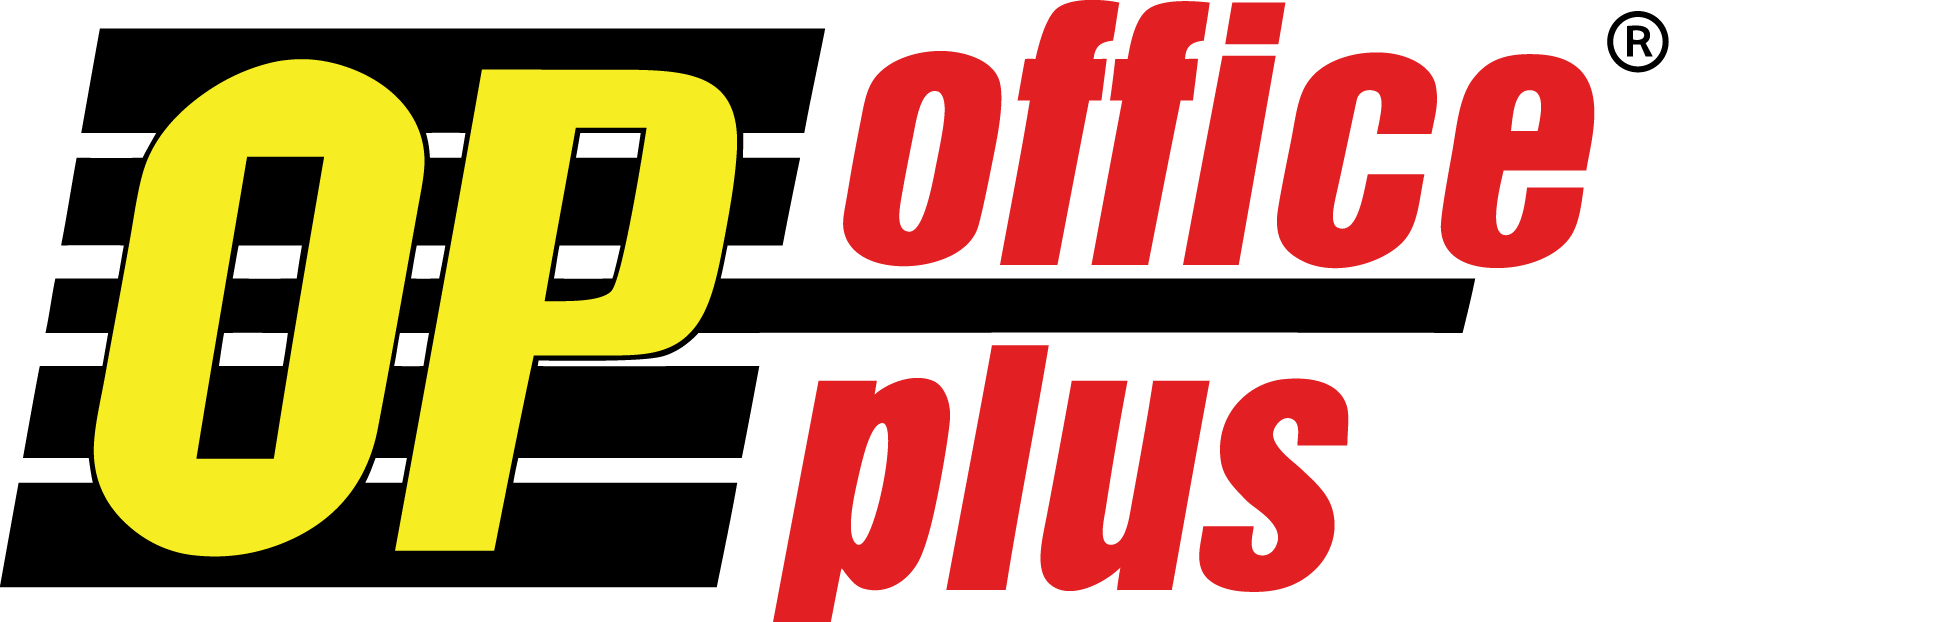 Office Plus logo